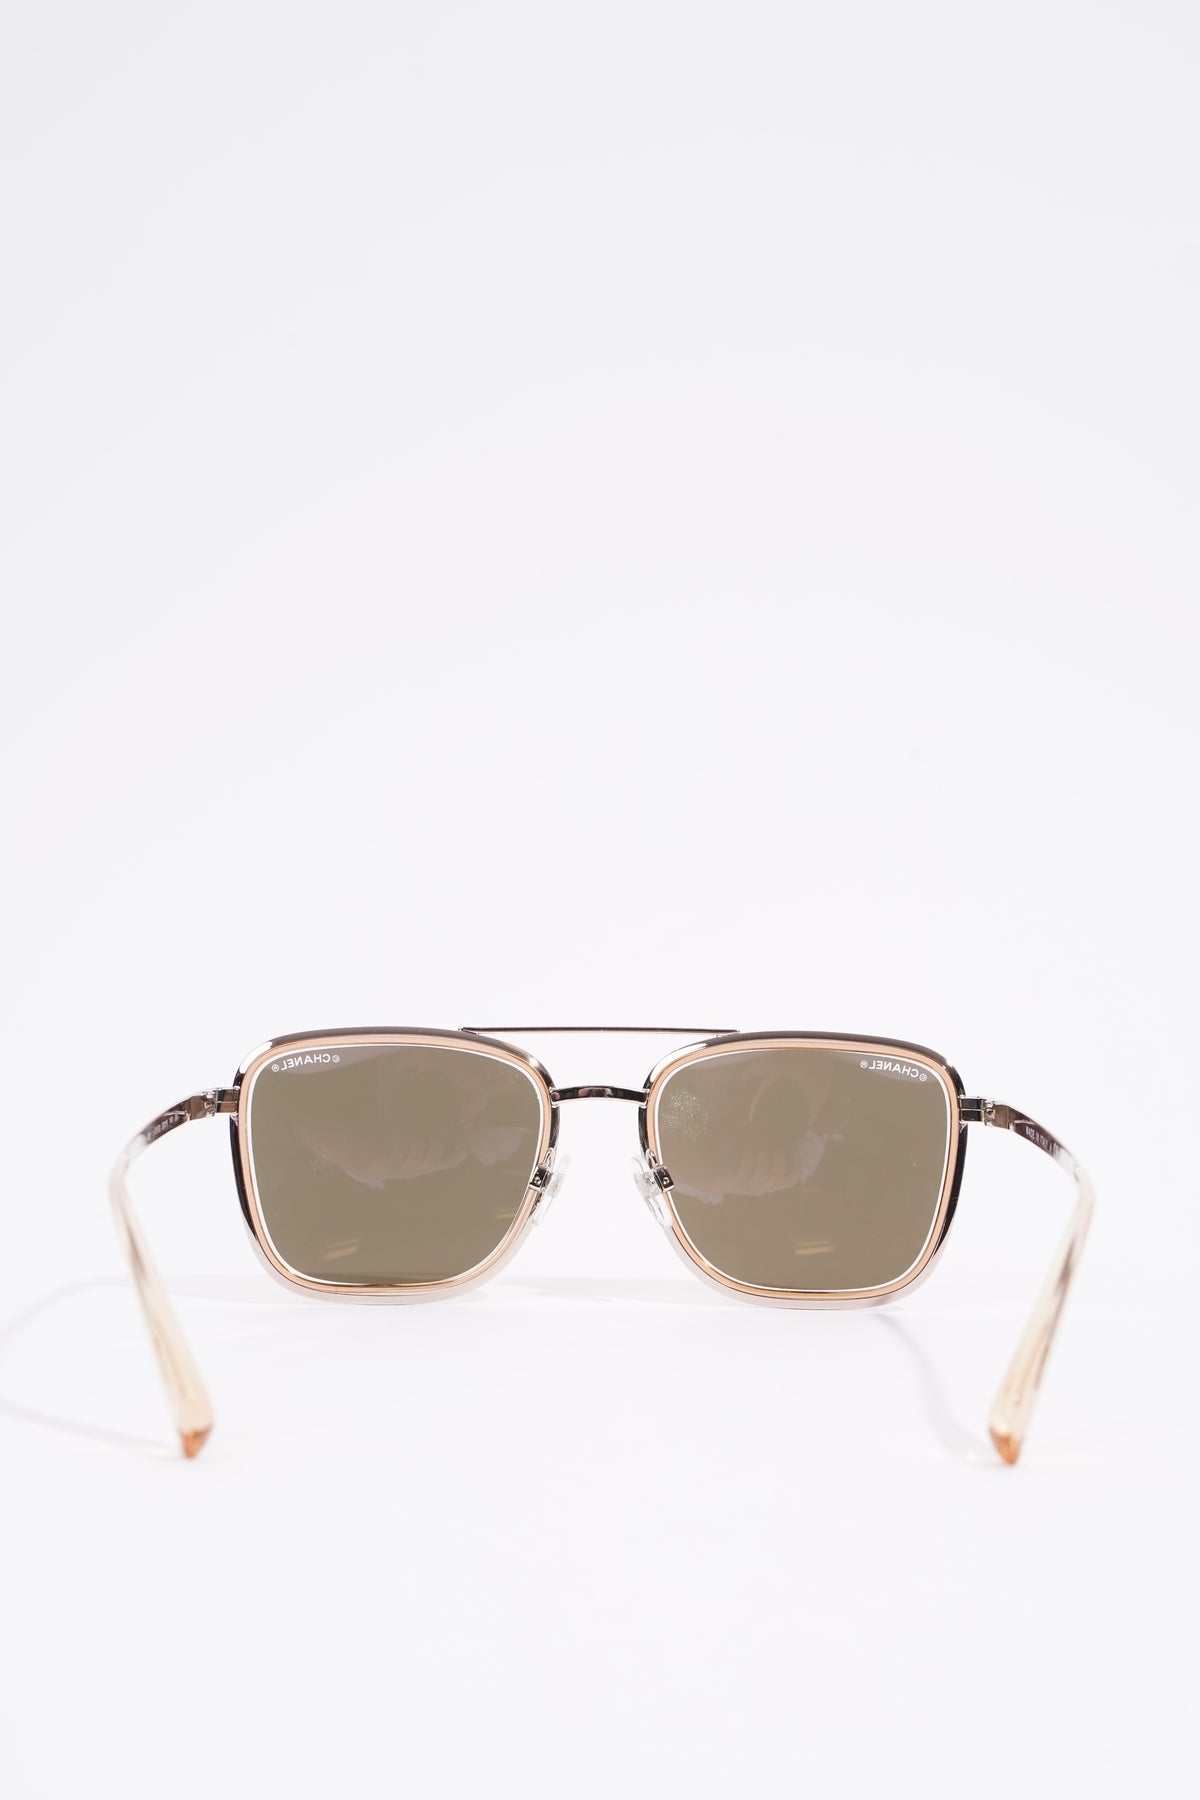 Chanel Silver Grey Brown Sunglasses Metal Pilot Womens Mens 4249 108/S6  23932